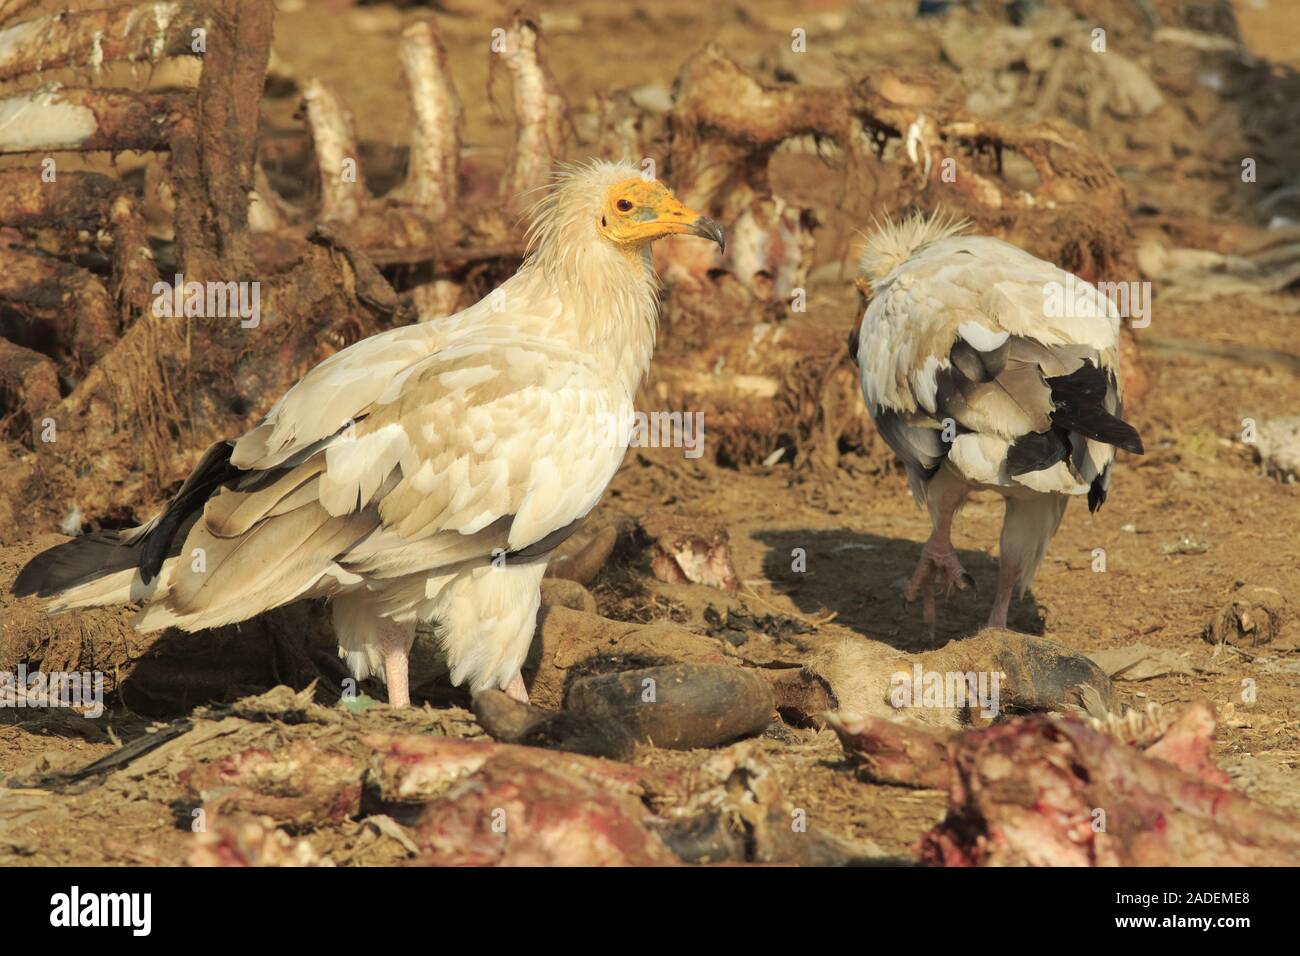 Egyptian vulture on carcass Stock Photo